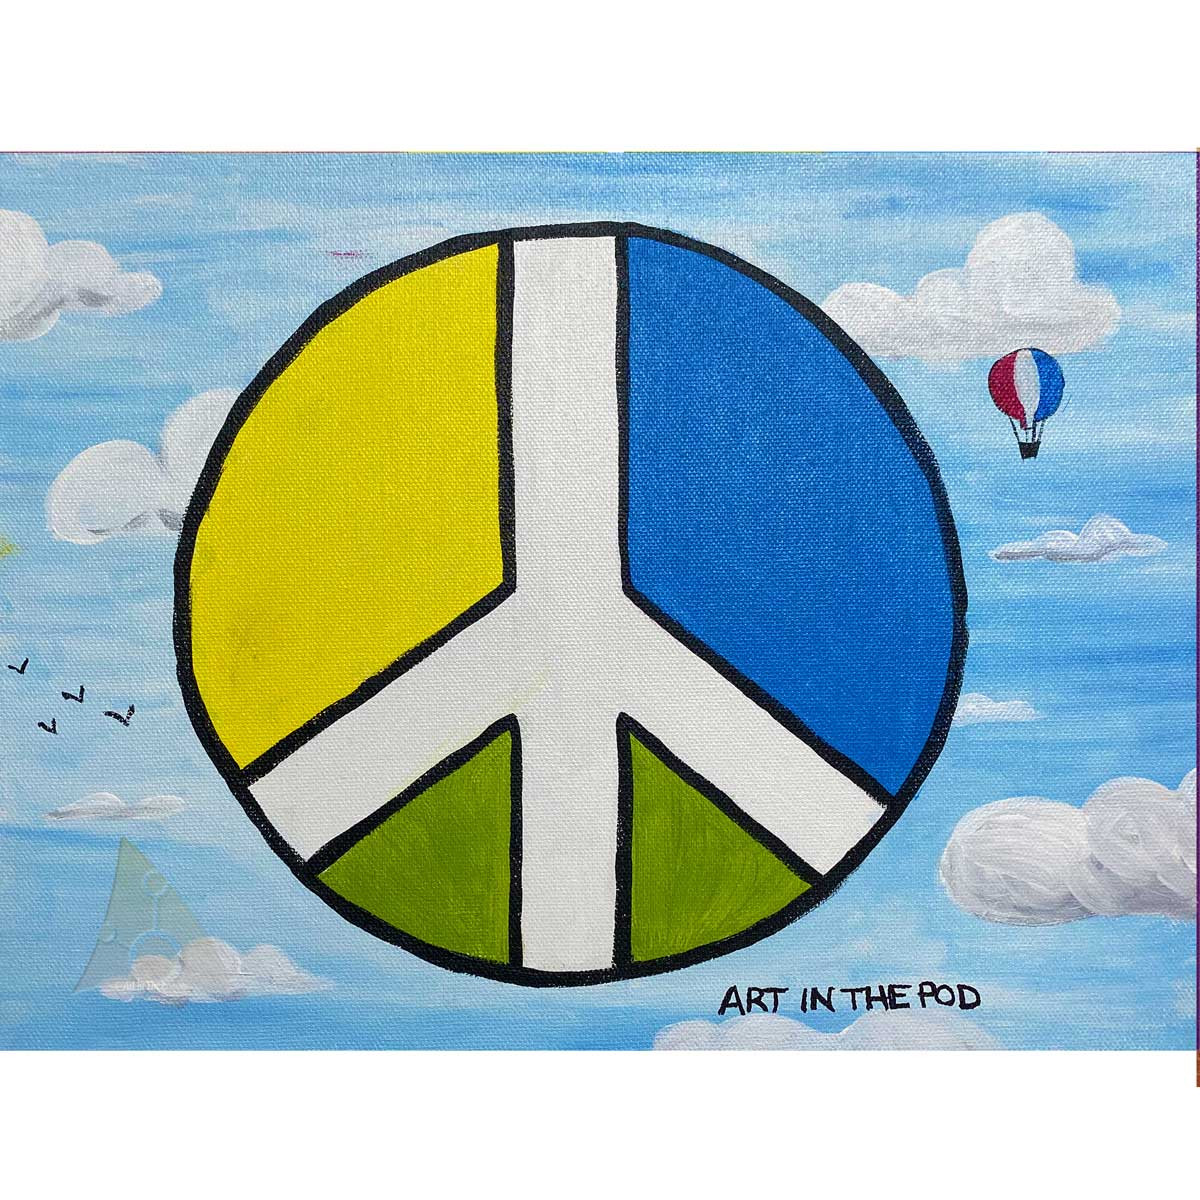 MLK-DAY-SPREAD-THE-PEACE-1-18-2021-PM-ART-CAMP.jpg